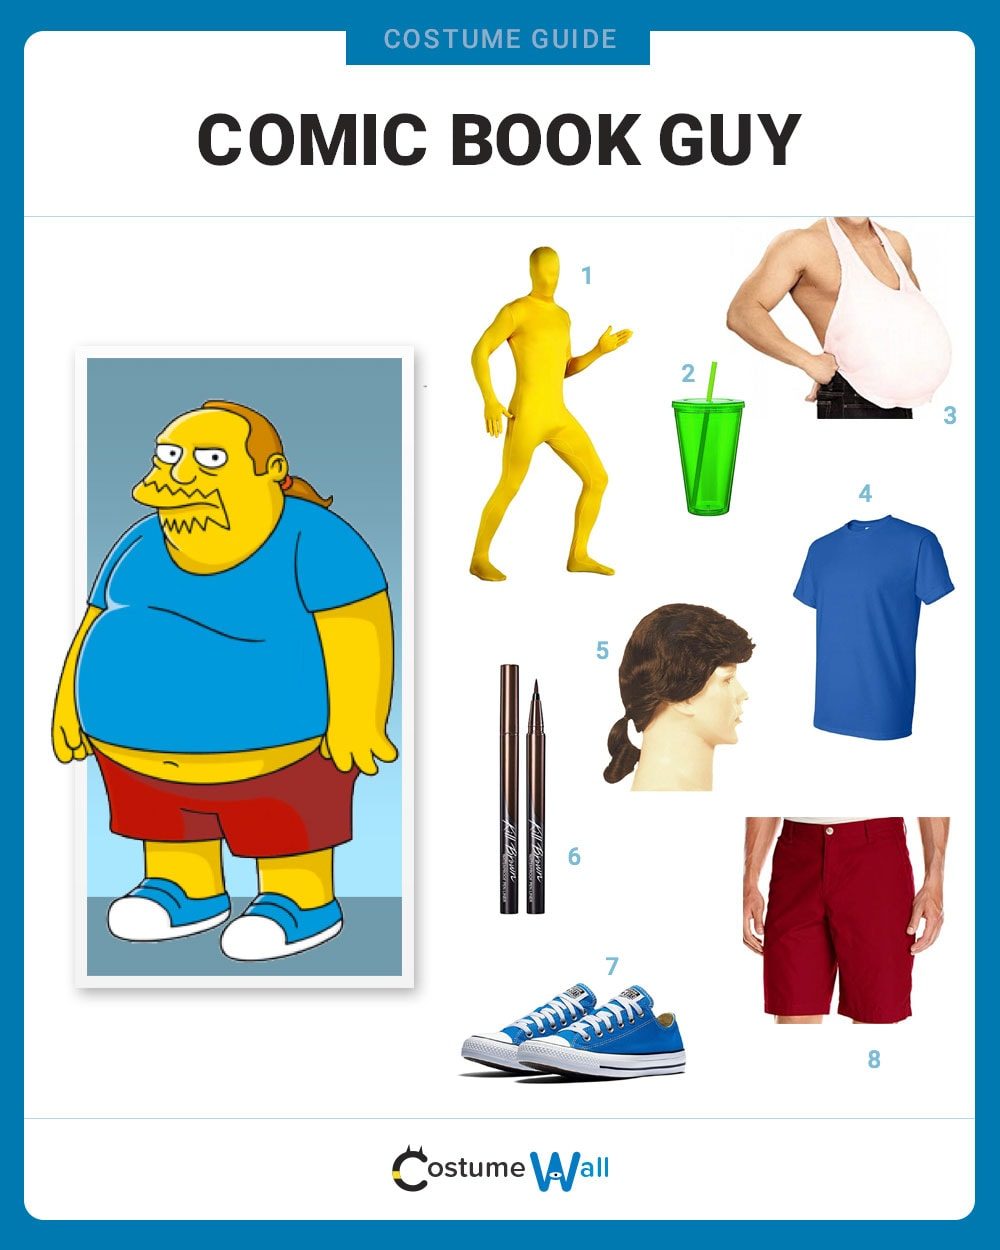 Comic Book Guy Costume Guide